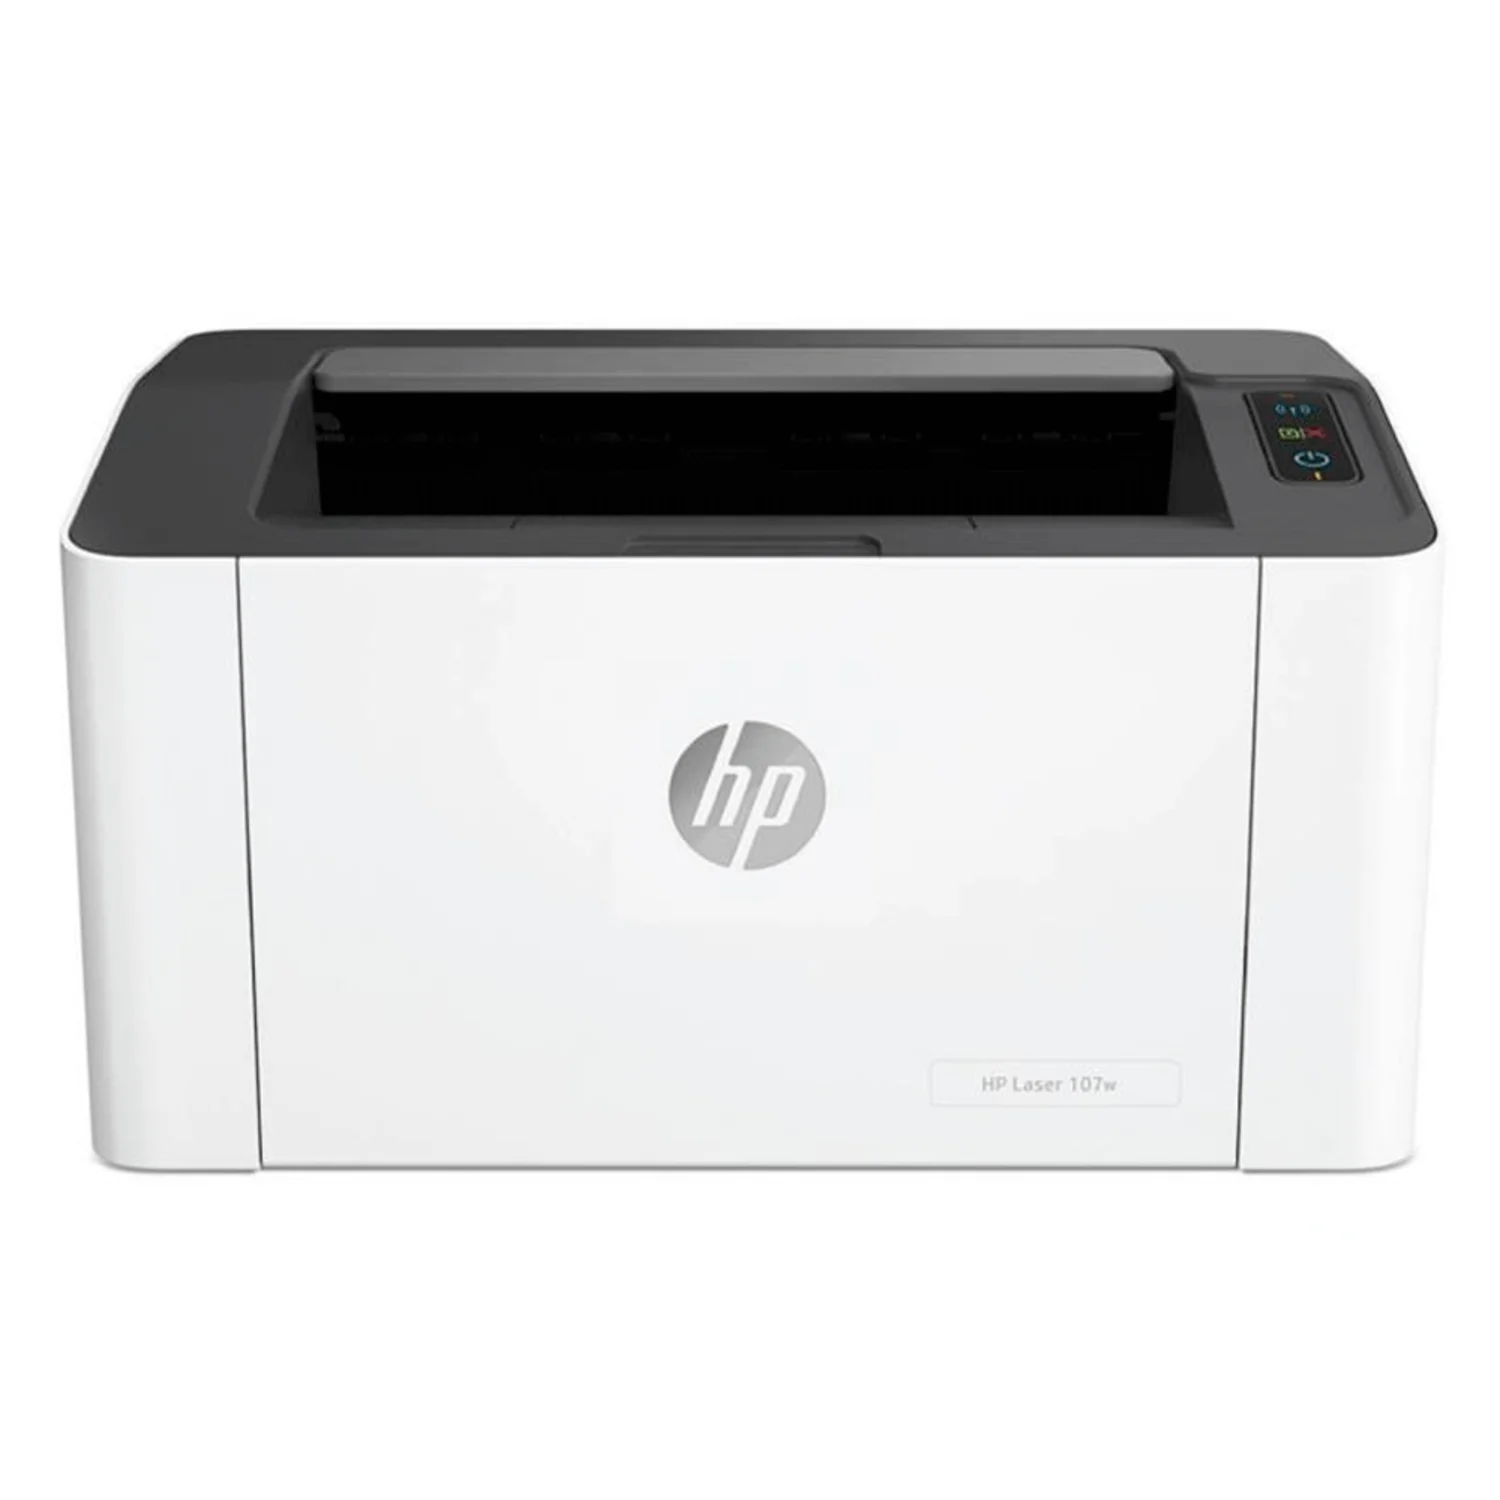 Impressora HP Laserjet Pro 107W Wi-Fi 220V - Branco (Cartucho 105A)